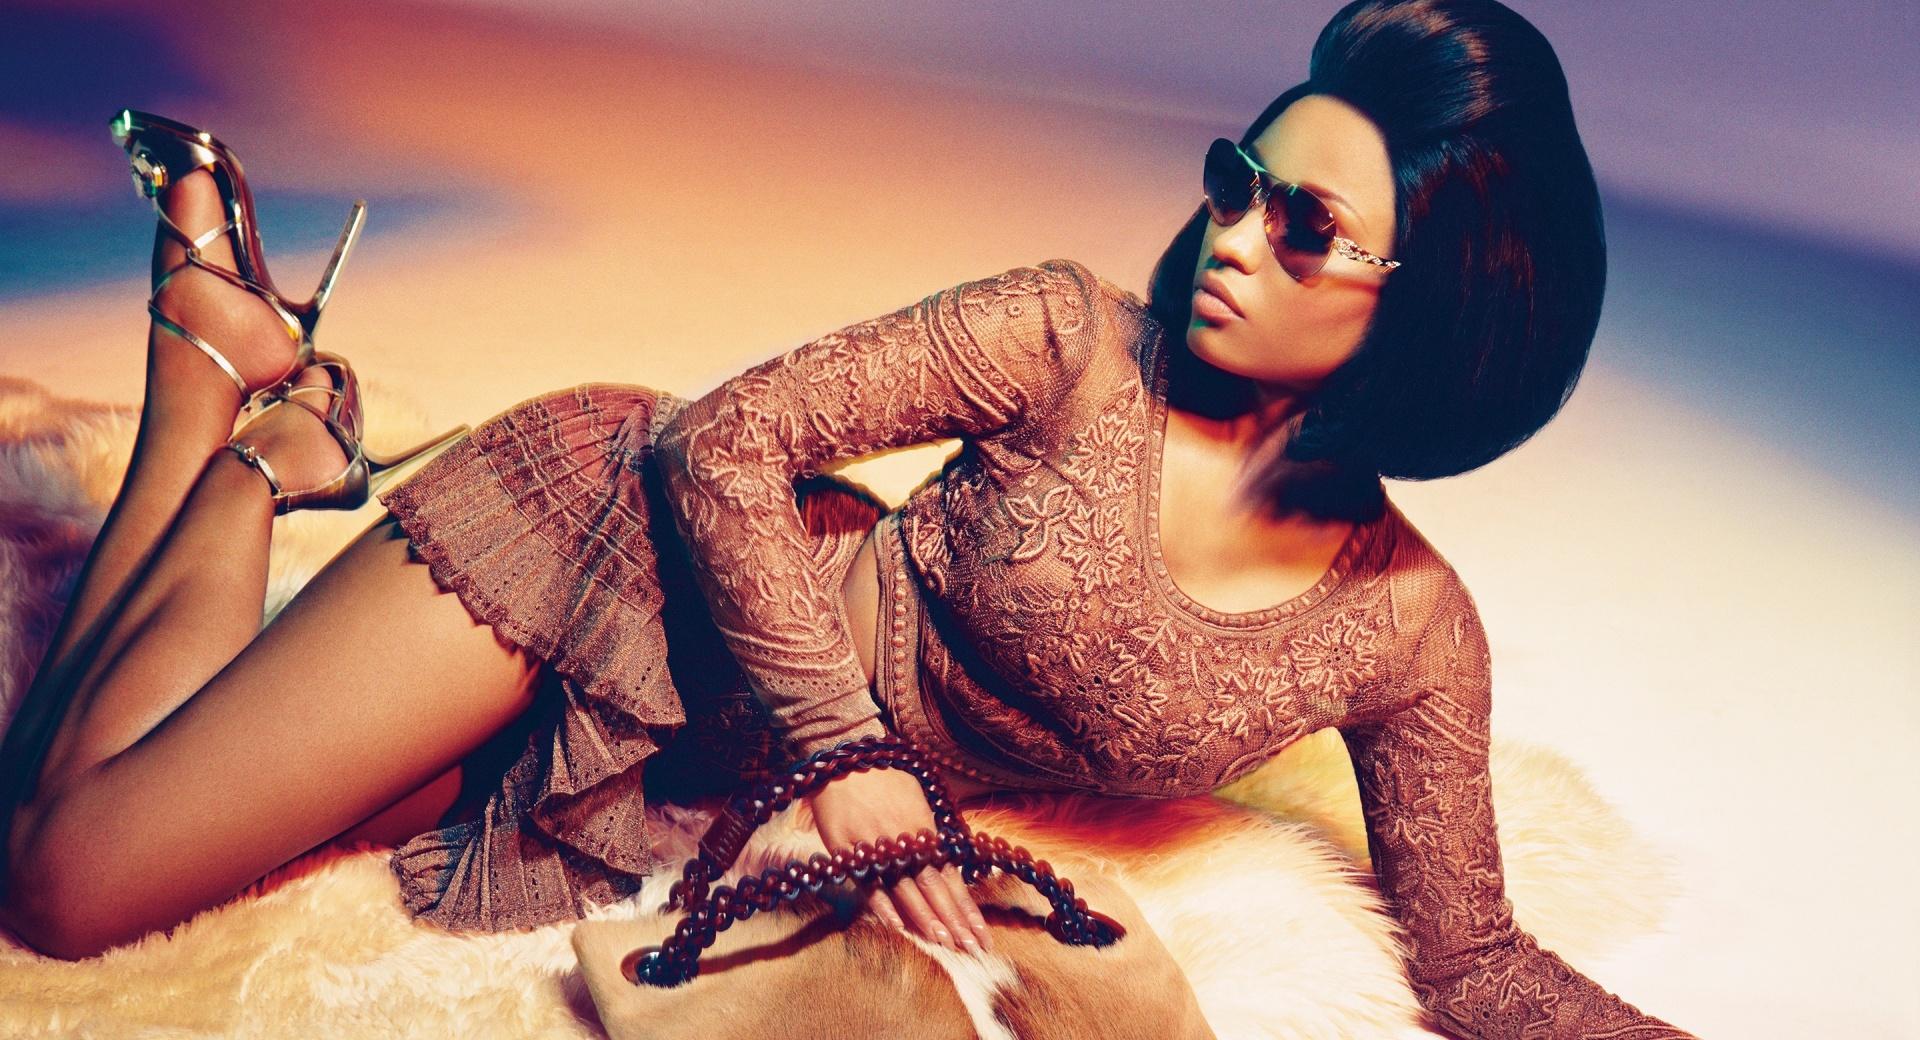 Nicki Minaj Fashion 2015 at 640 x 960 iPhone 4 size wallpapers HD quality